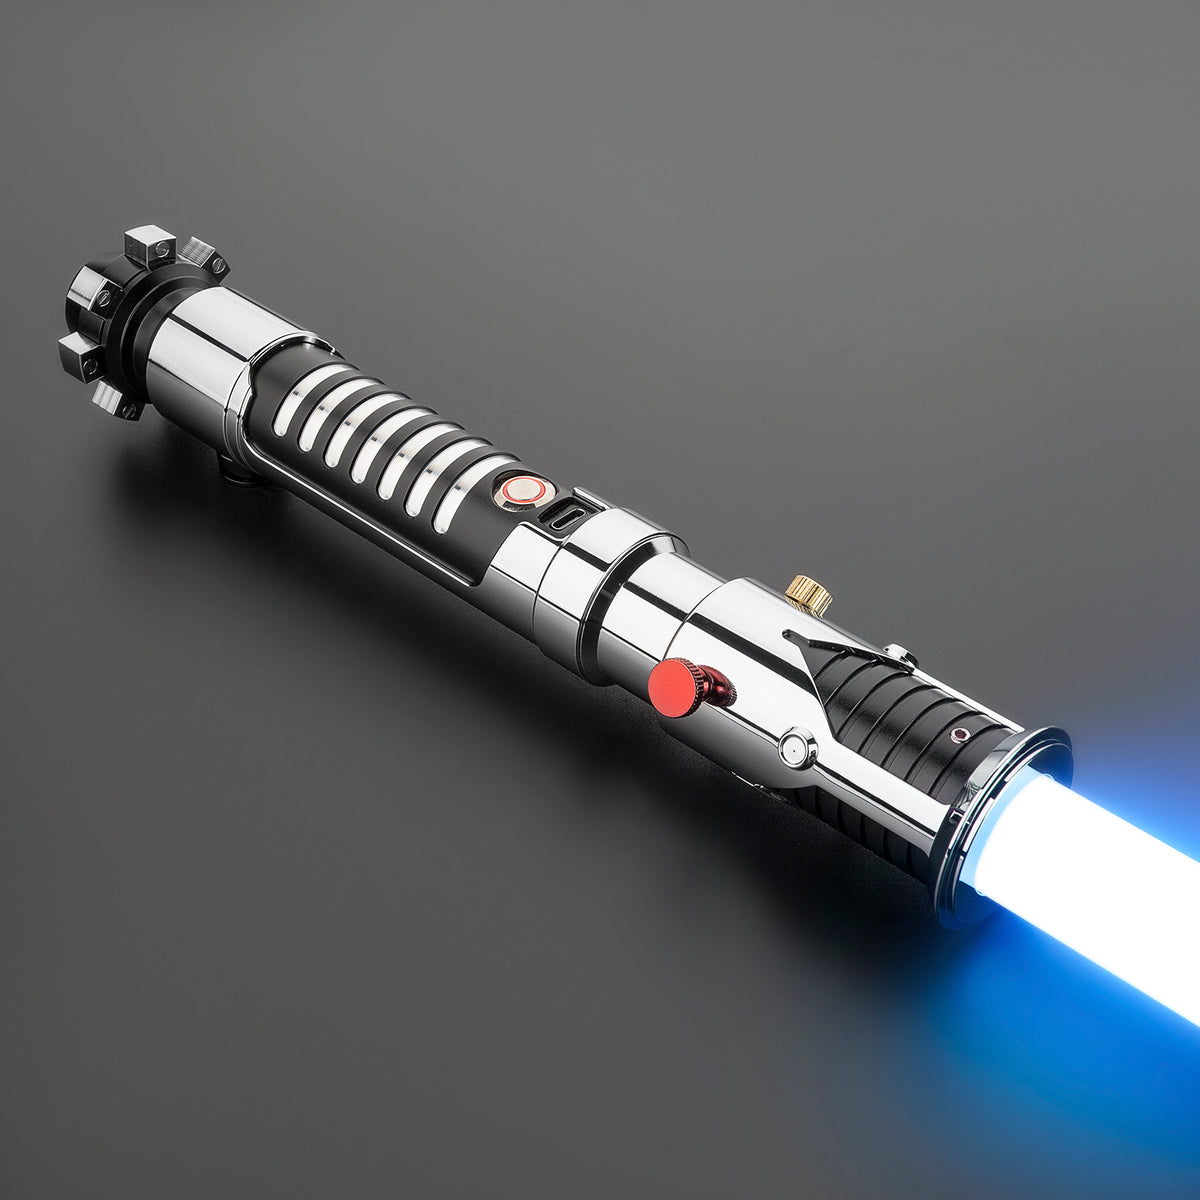 SaberCustom Obi Wan Kenobi lightsaber NO057